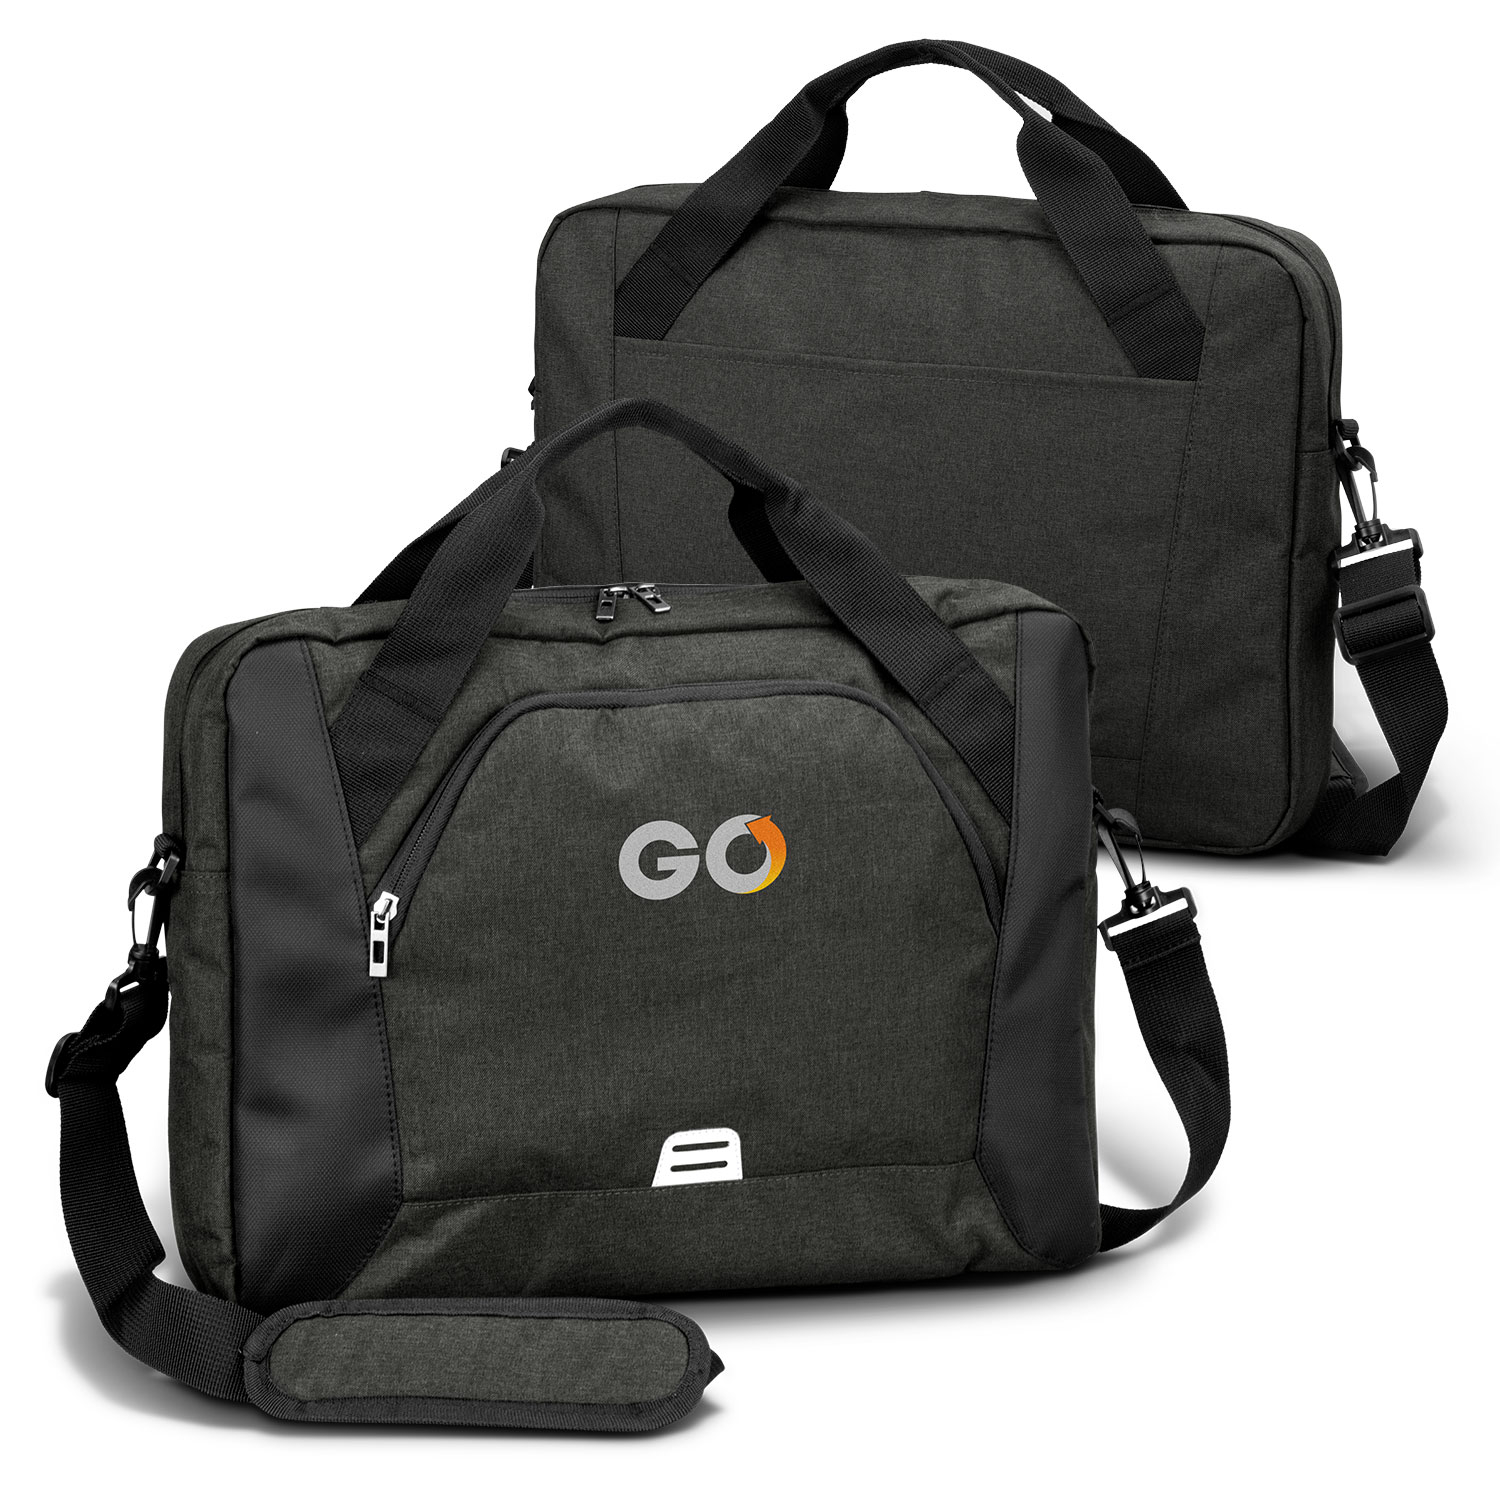 Laptop Bags Selwyn Laptop Bag bag